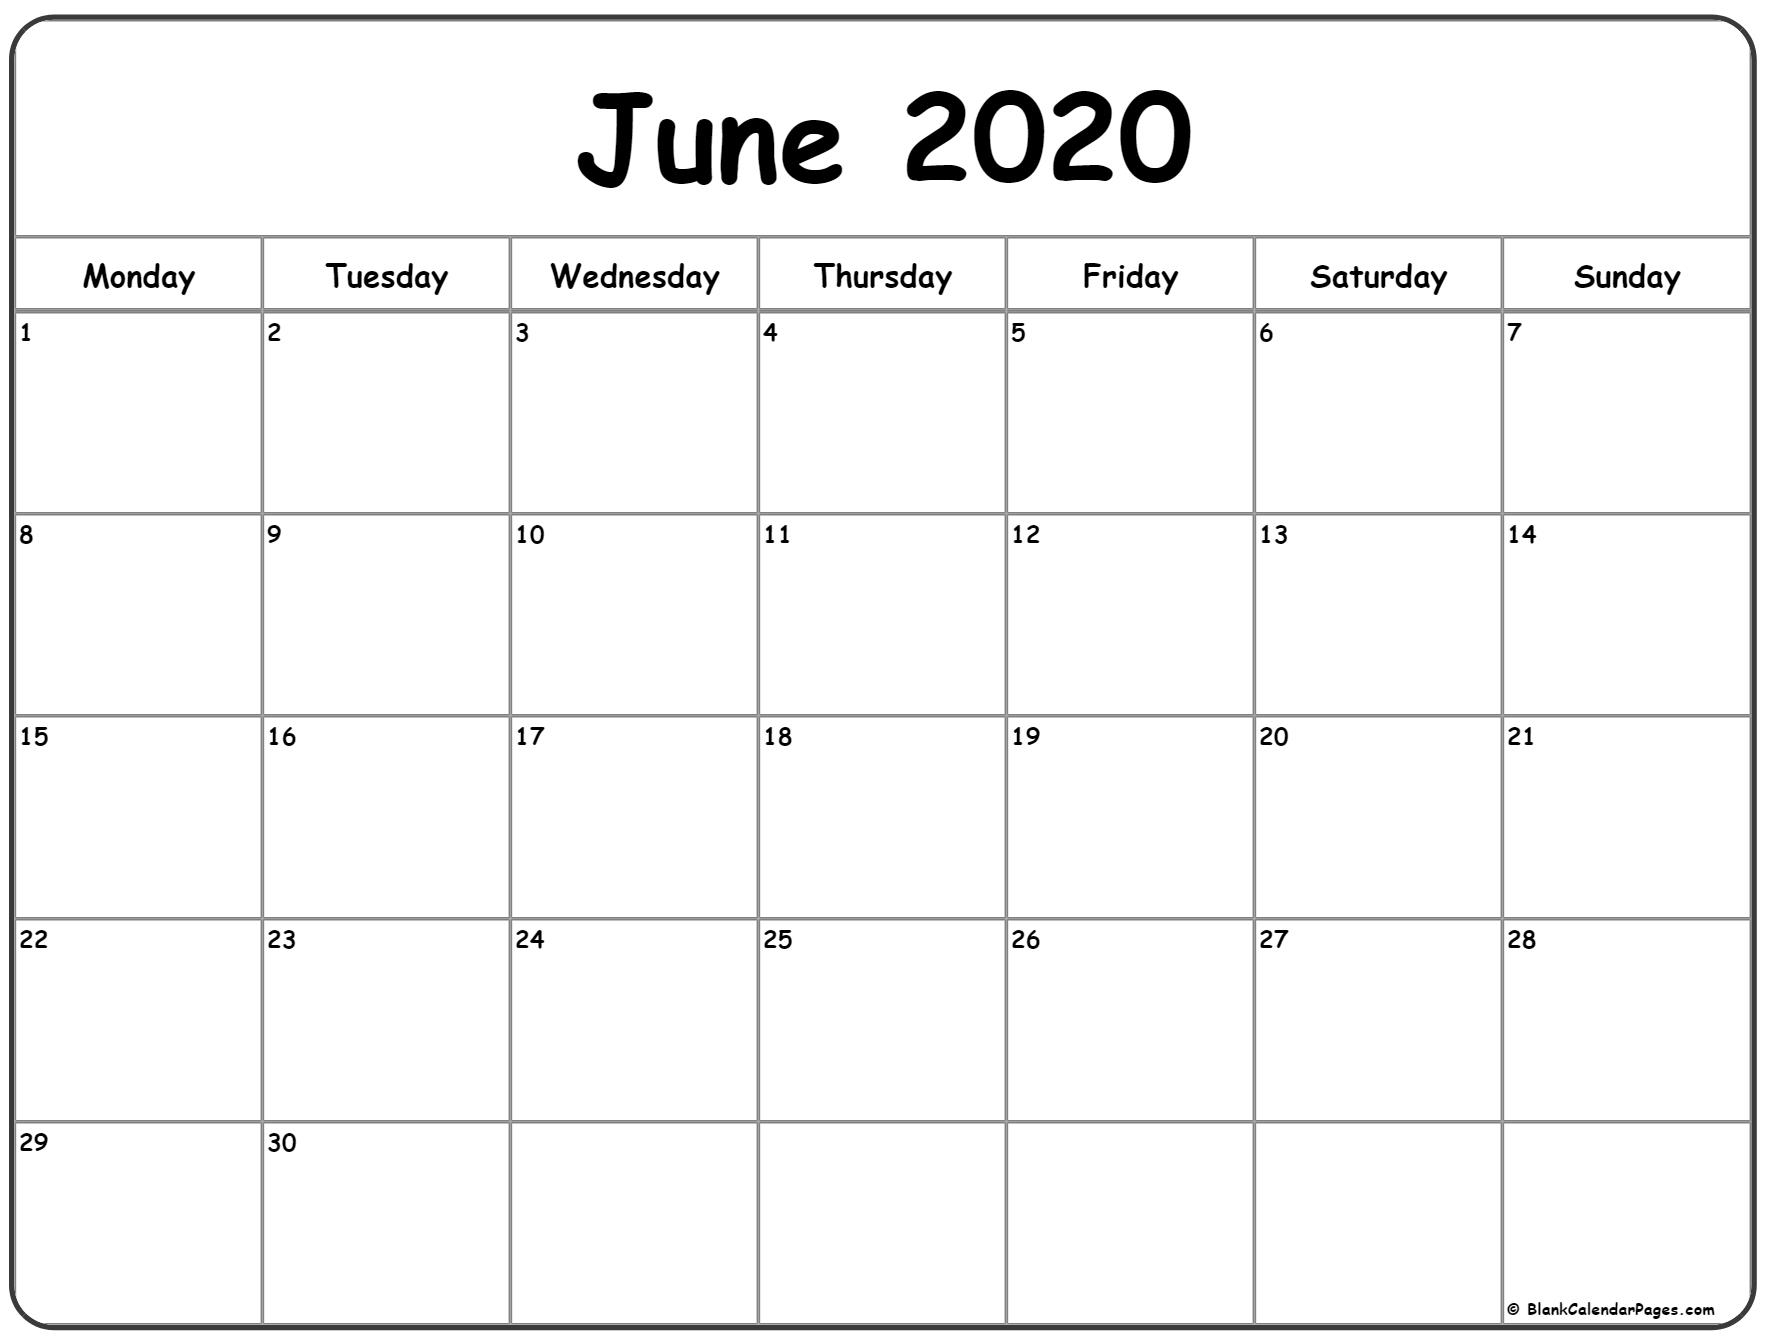 June 2020 Monday Calendar | Monday To Sunday intended for Monday Thru Friday Calendar 2020 Printable